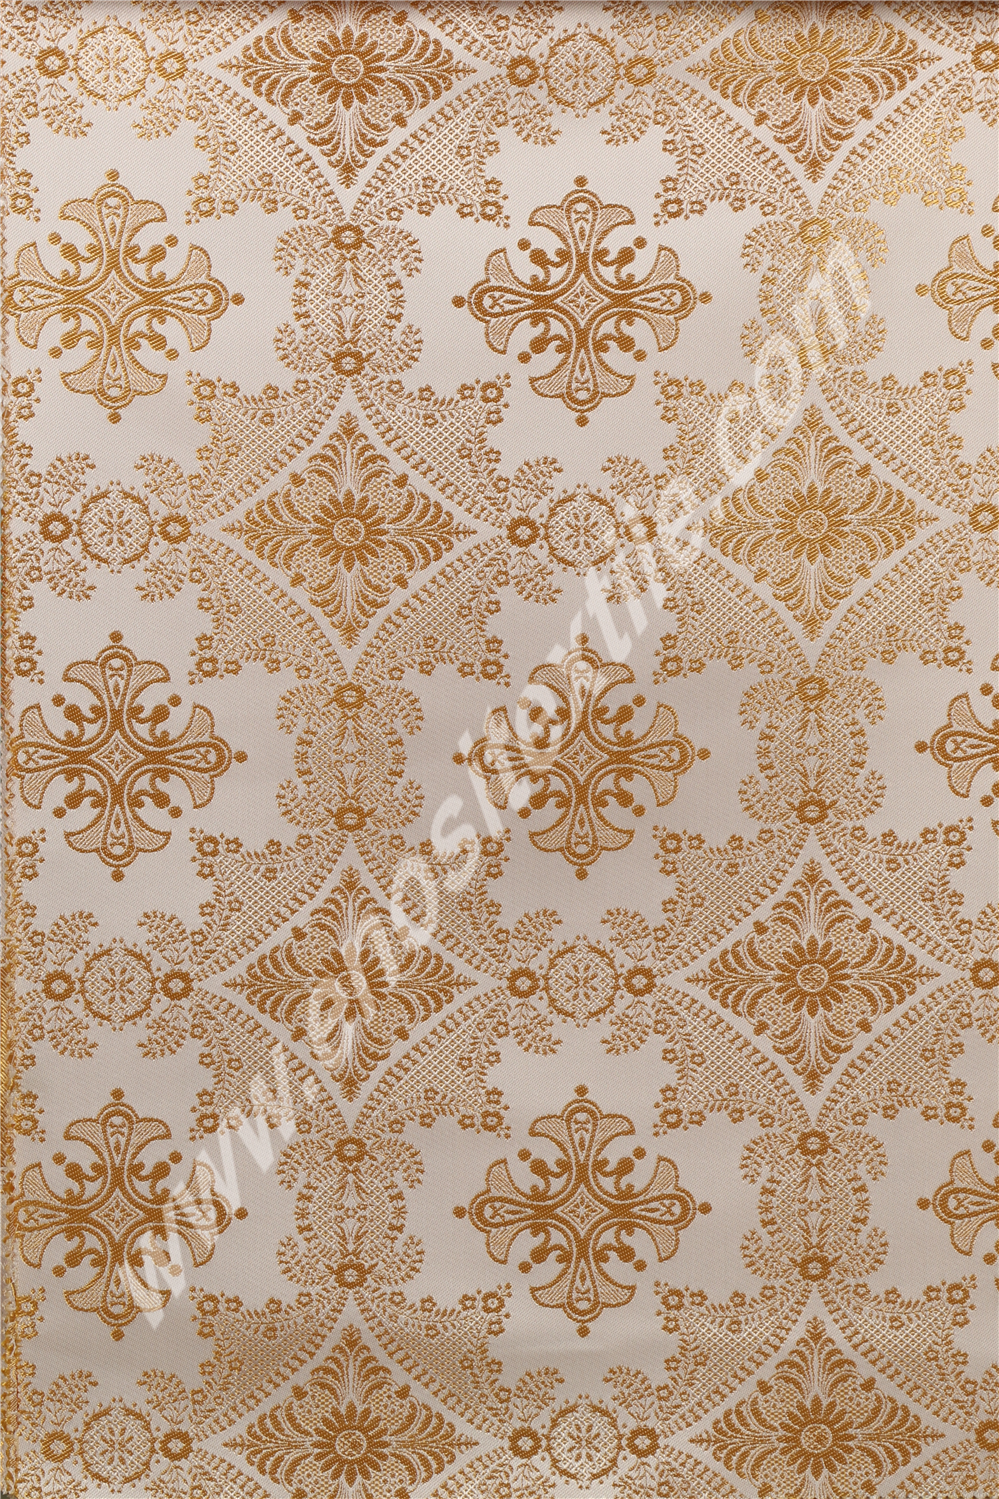 KL-001 White-Gold Brocade Fabrics